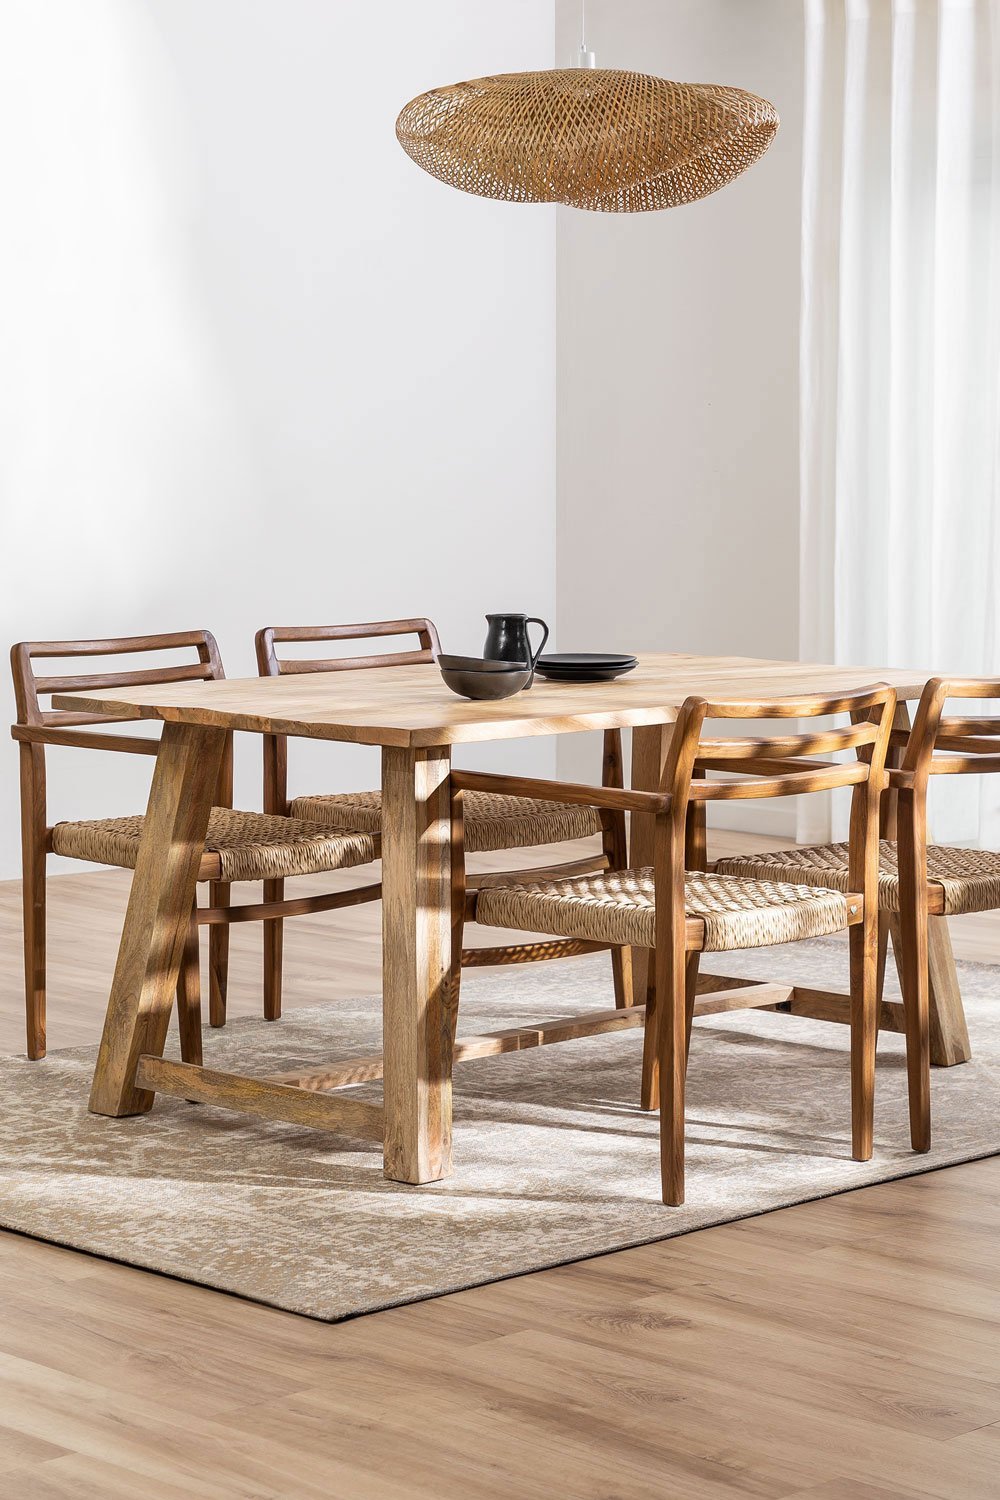 Mango Wood Dining Table (160 x 90 cm) Zarek, gallery image 1